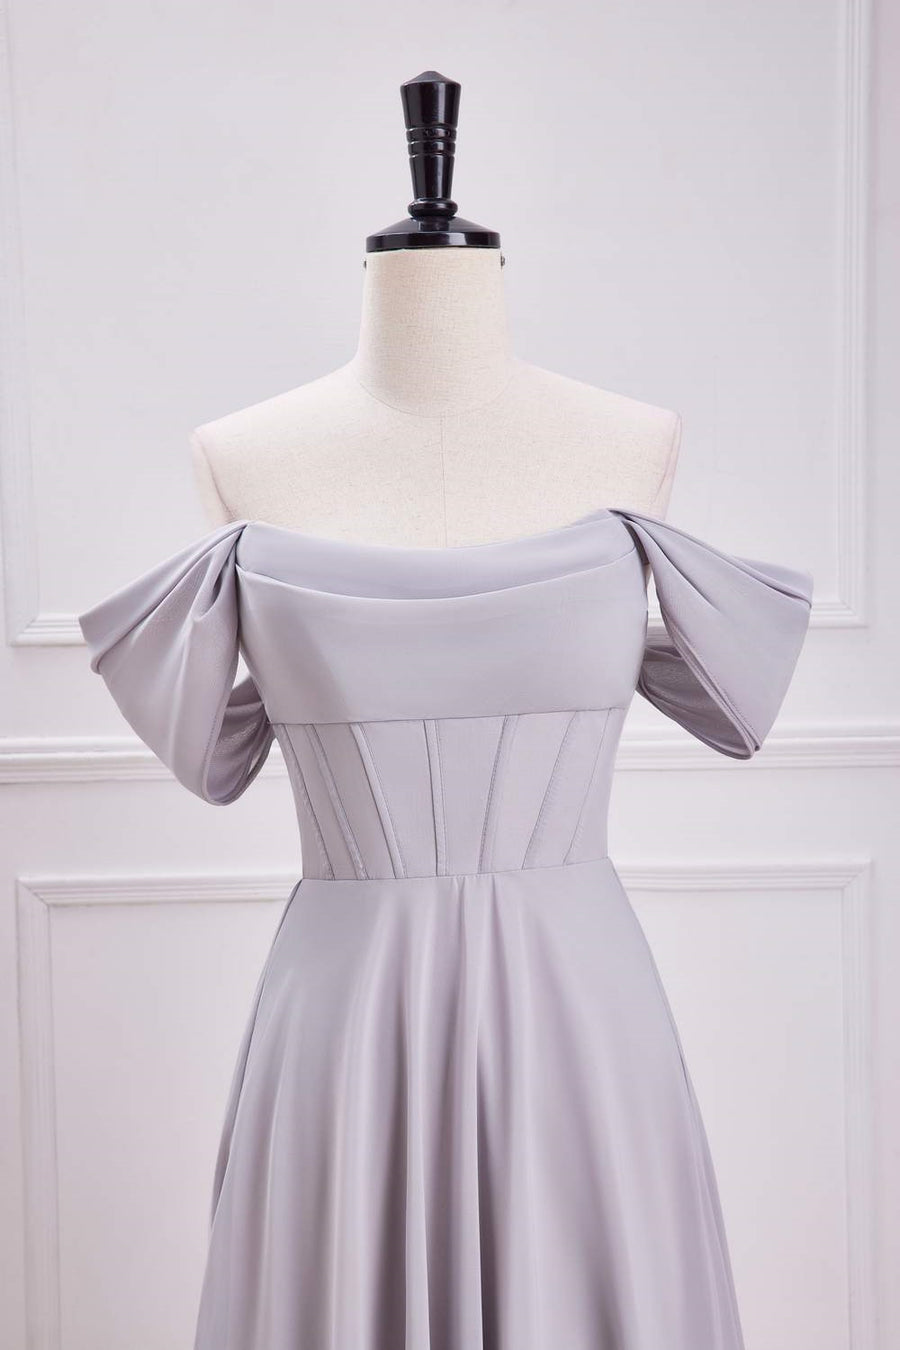 Grey Off-Shoulder A-line Chiffon Long Bridesmaid Dress with Slit